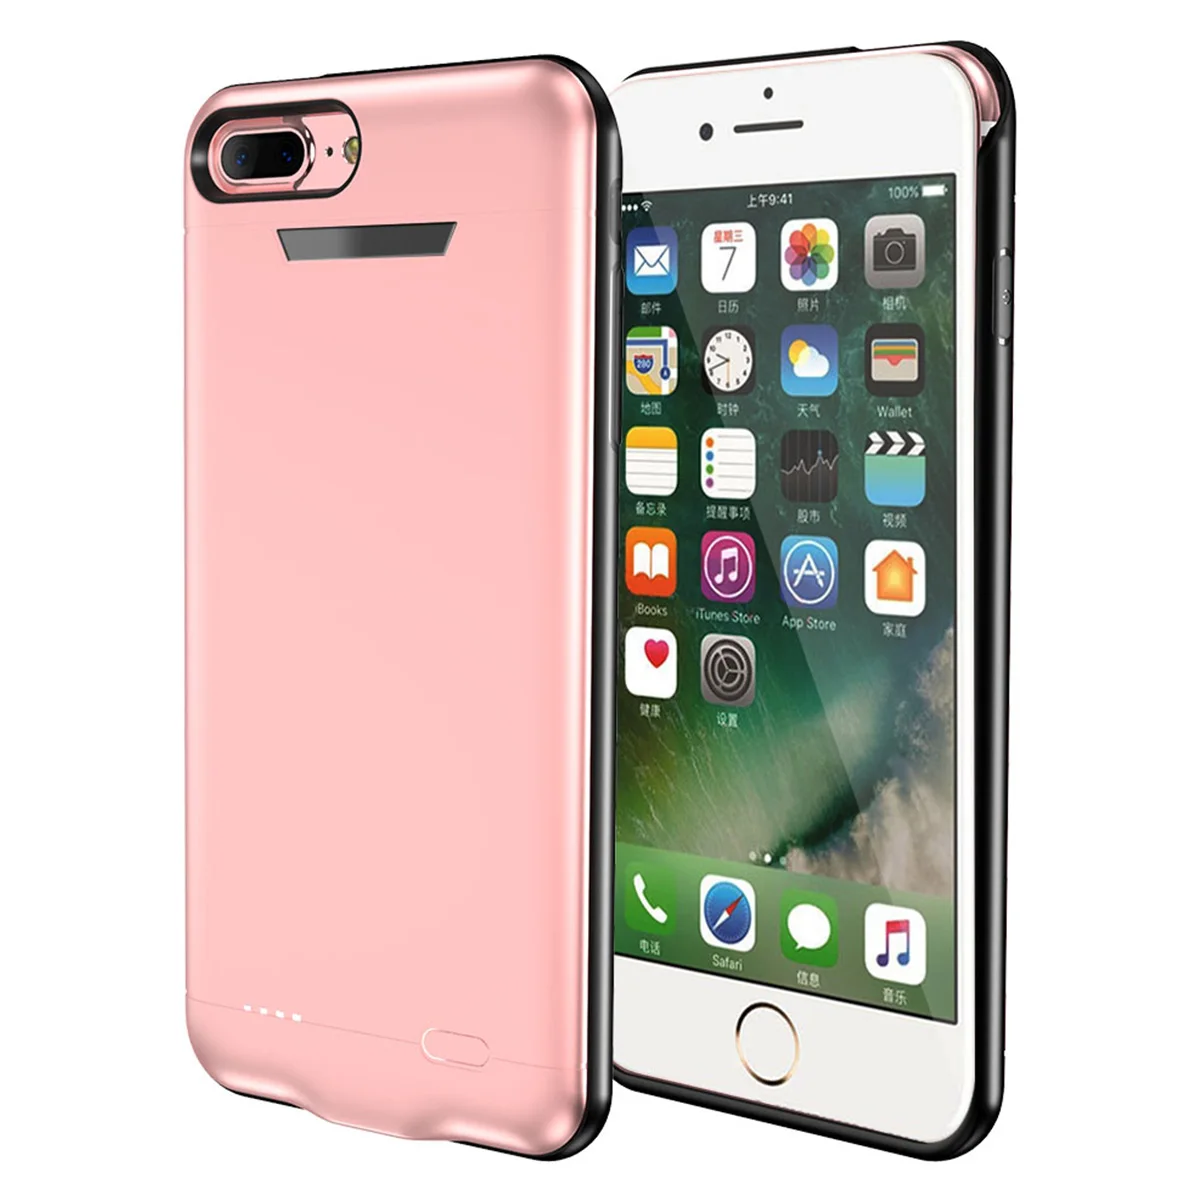 Casewin Батарея Зарядное устройство чехол для iPhone 6 Plus/6s Плюс/7 Plus/8 Plus 4200 мА/ч, Мощность банк Ёмкость Батарея Зарядное устройство чехол для телефона - Цвет: Rose Gold